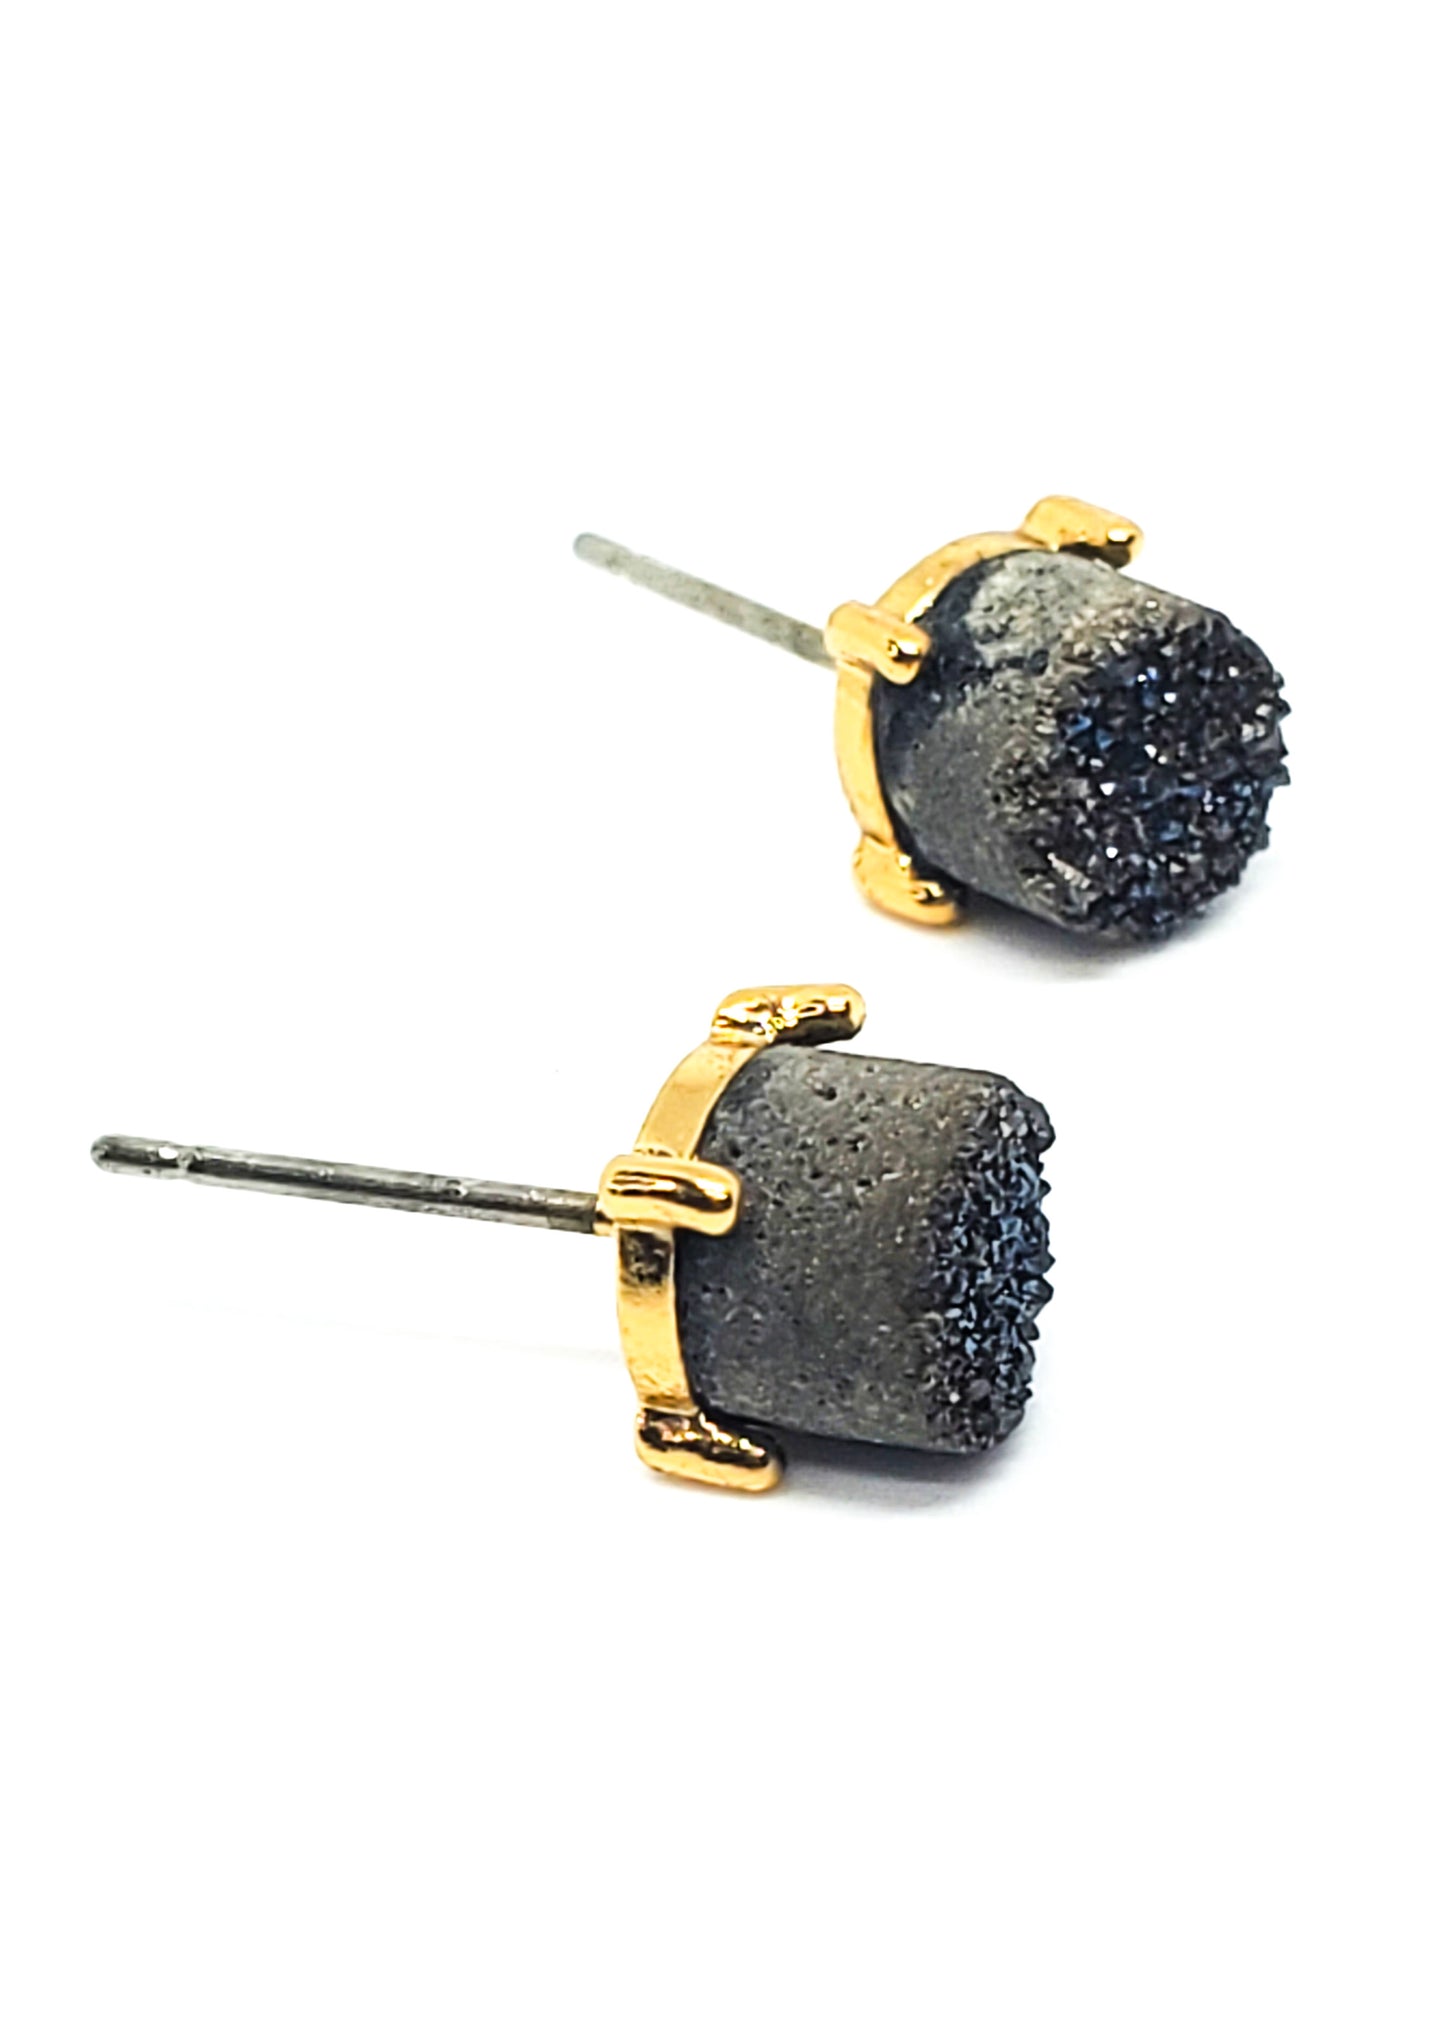 Black sparkling druzy gemstone gold toned post vintage earrings